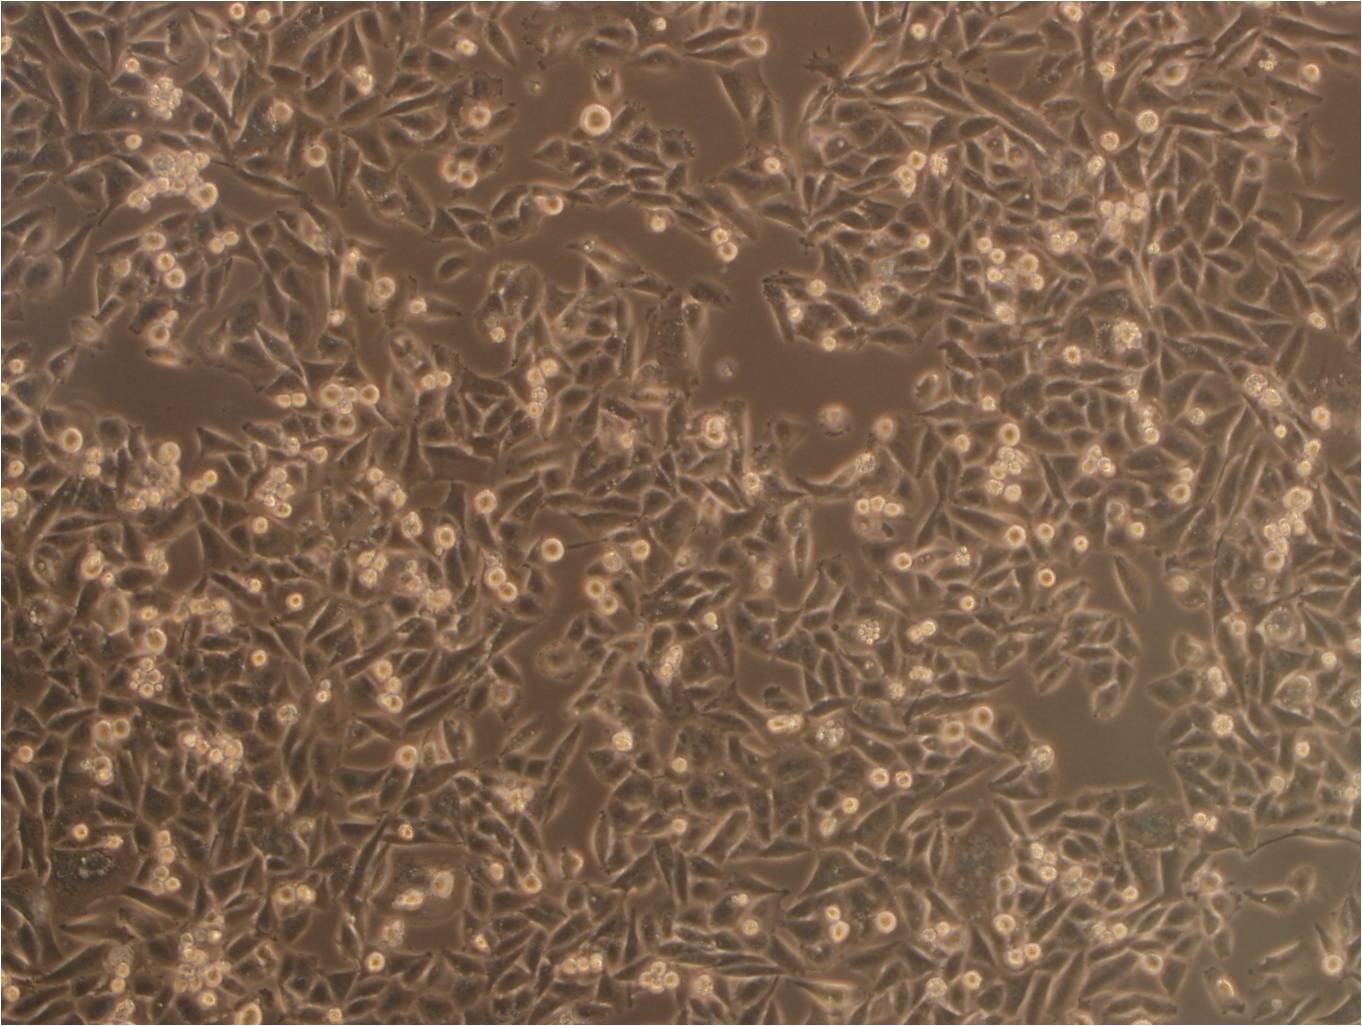 Ishikawa epithelioid cells人子宫内膜癌细胞系